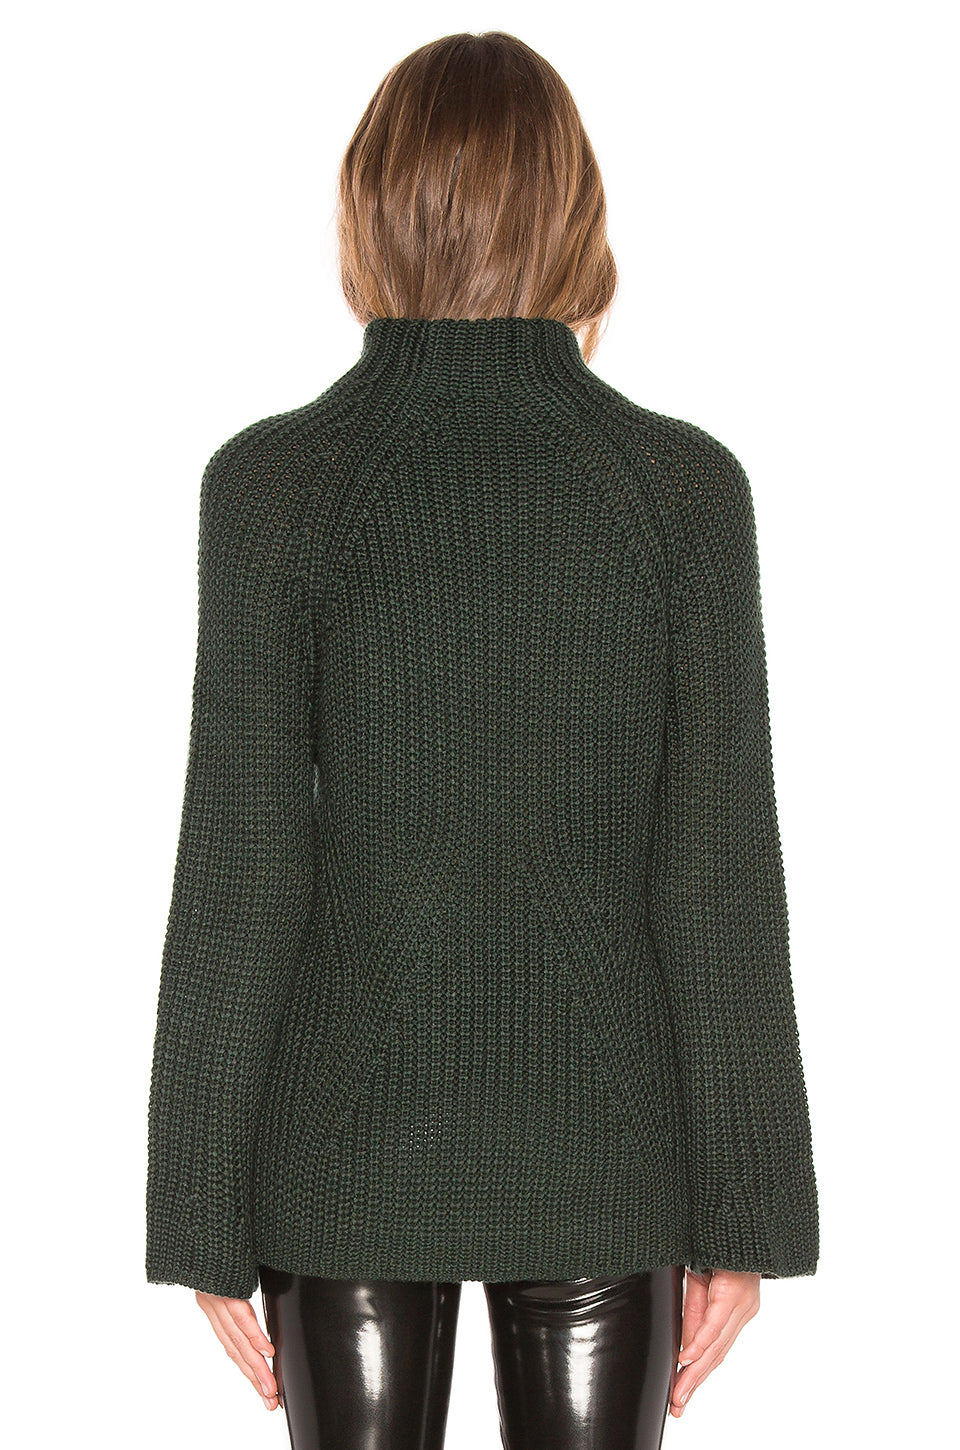 Raena Sweater in DARK GREEN